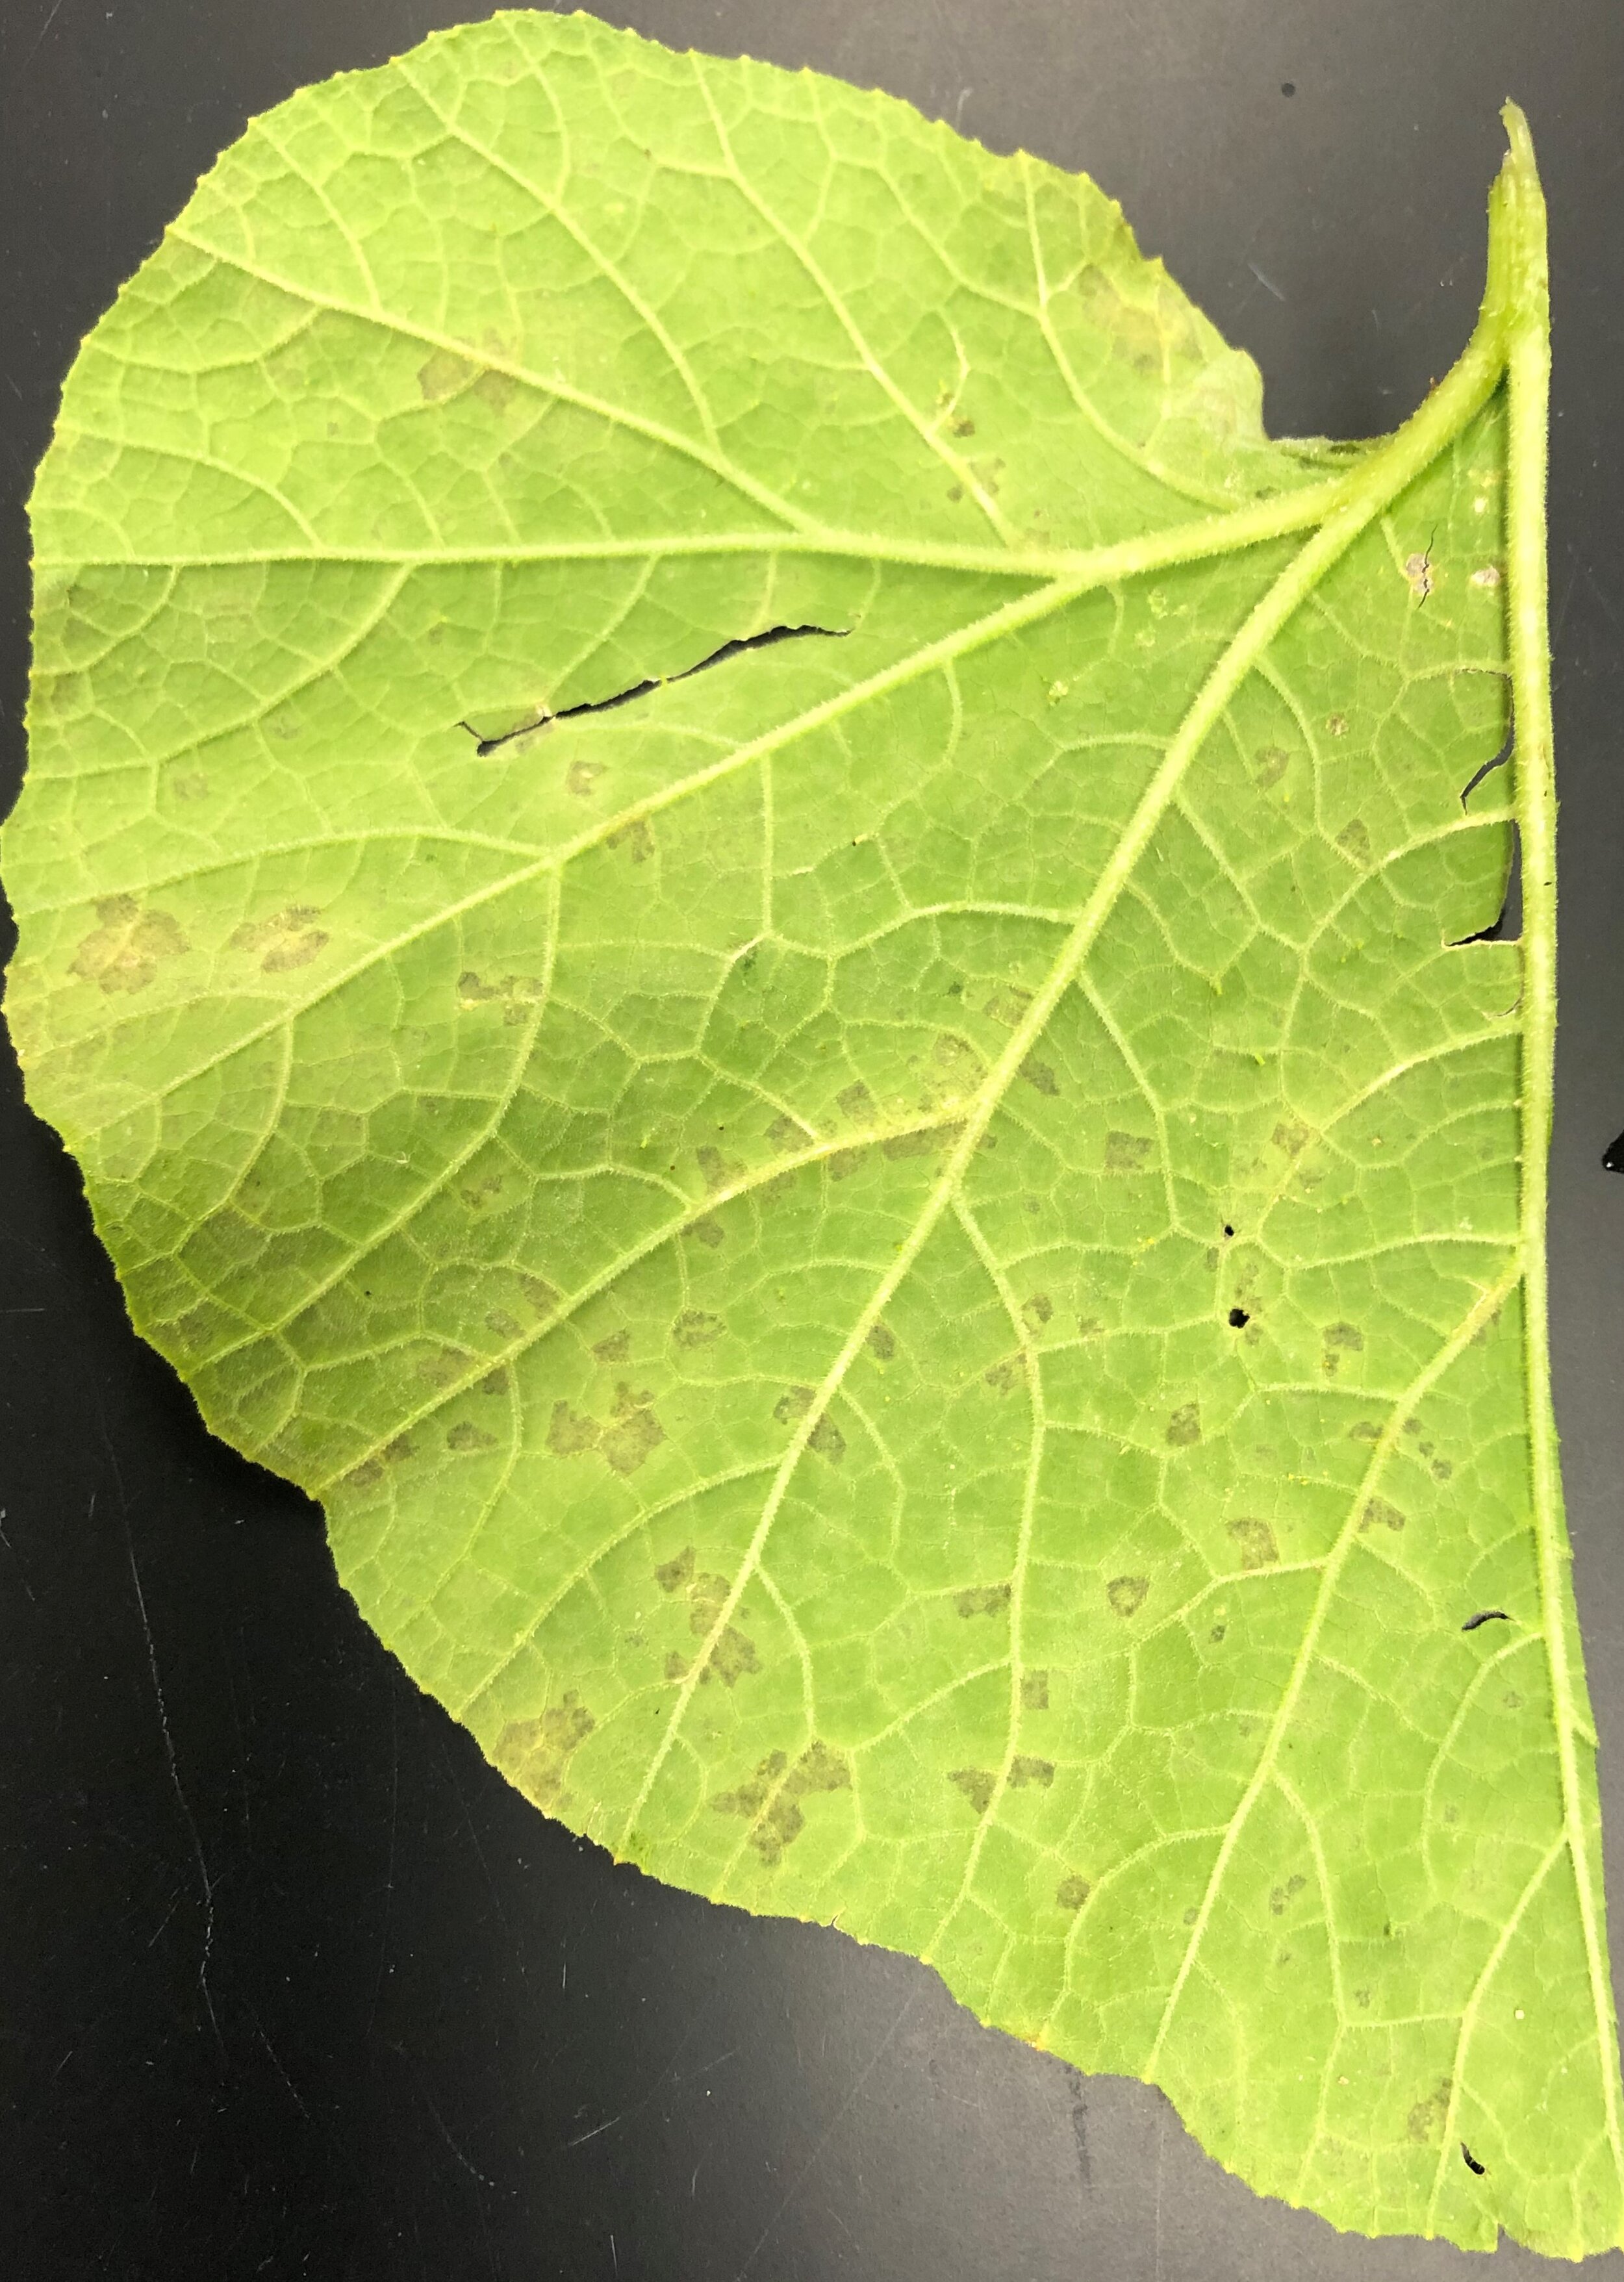 Leaf backside view of downy mildew on butternut squash.jpg